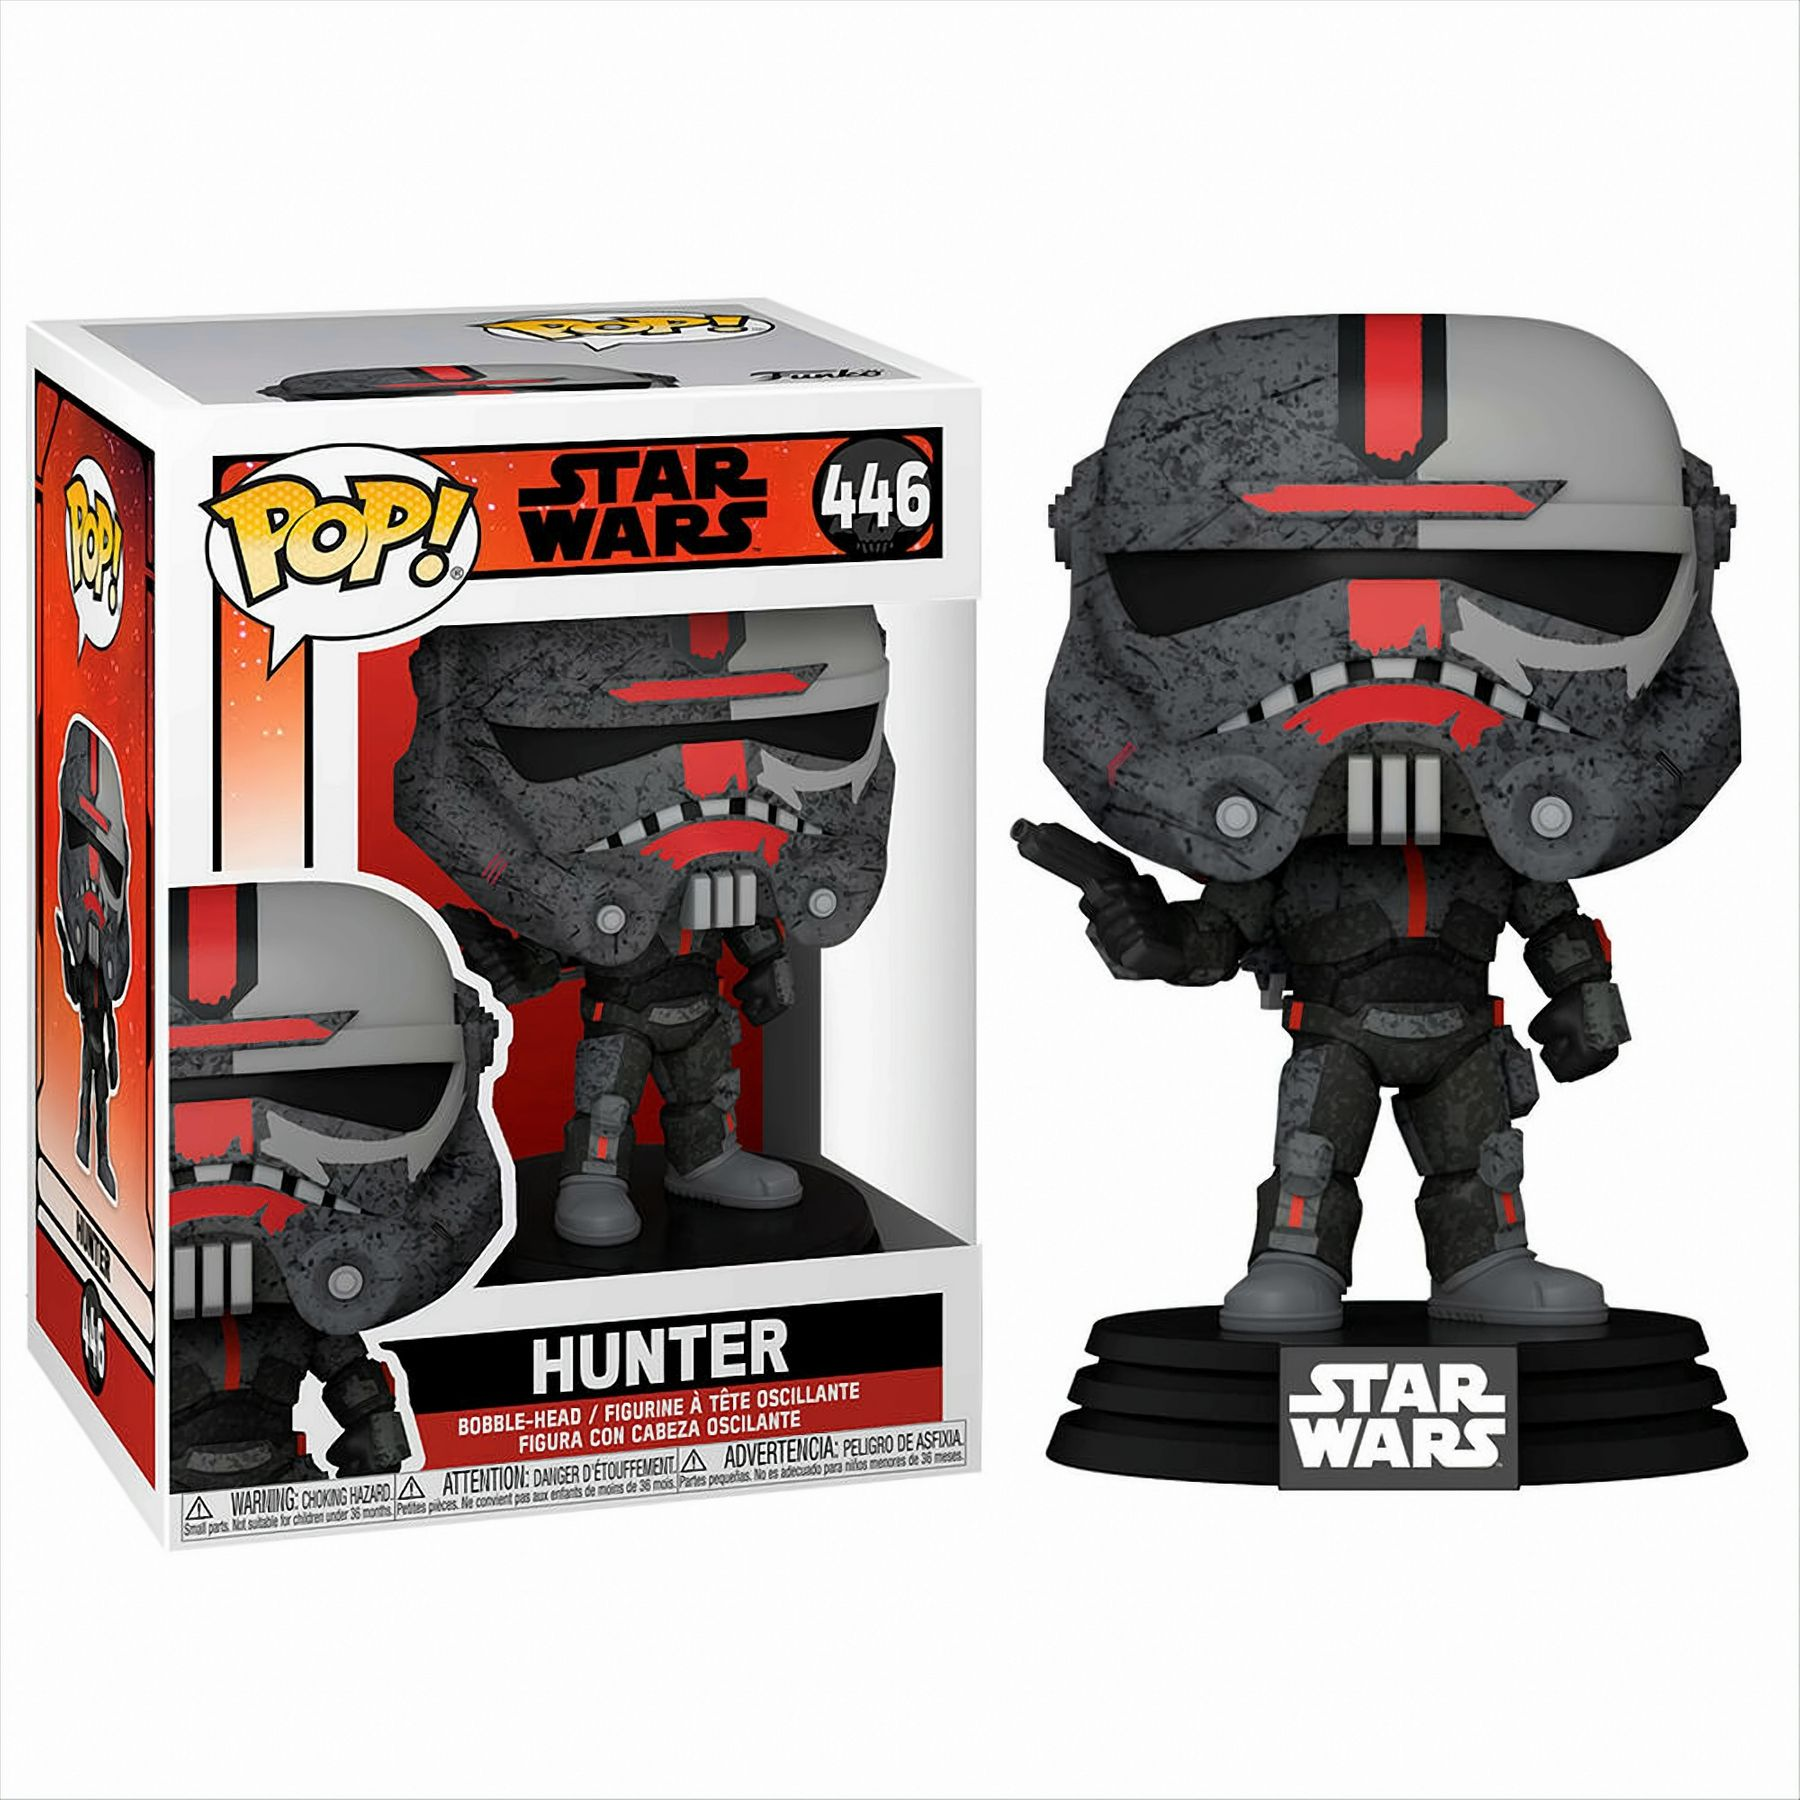 Wars: Star - Batch Hunter The Bad - POP